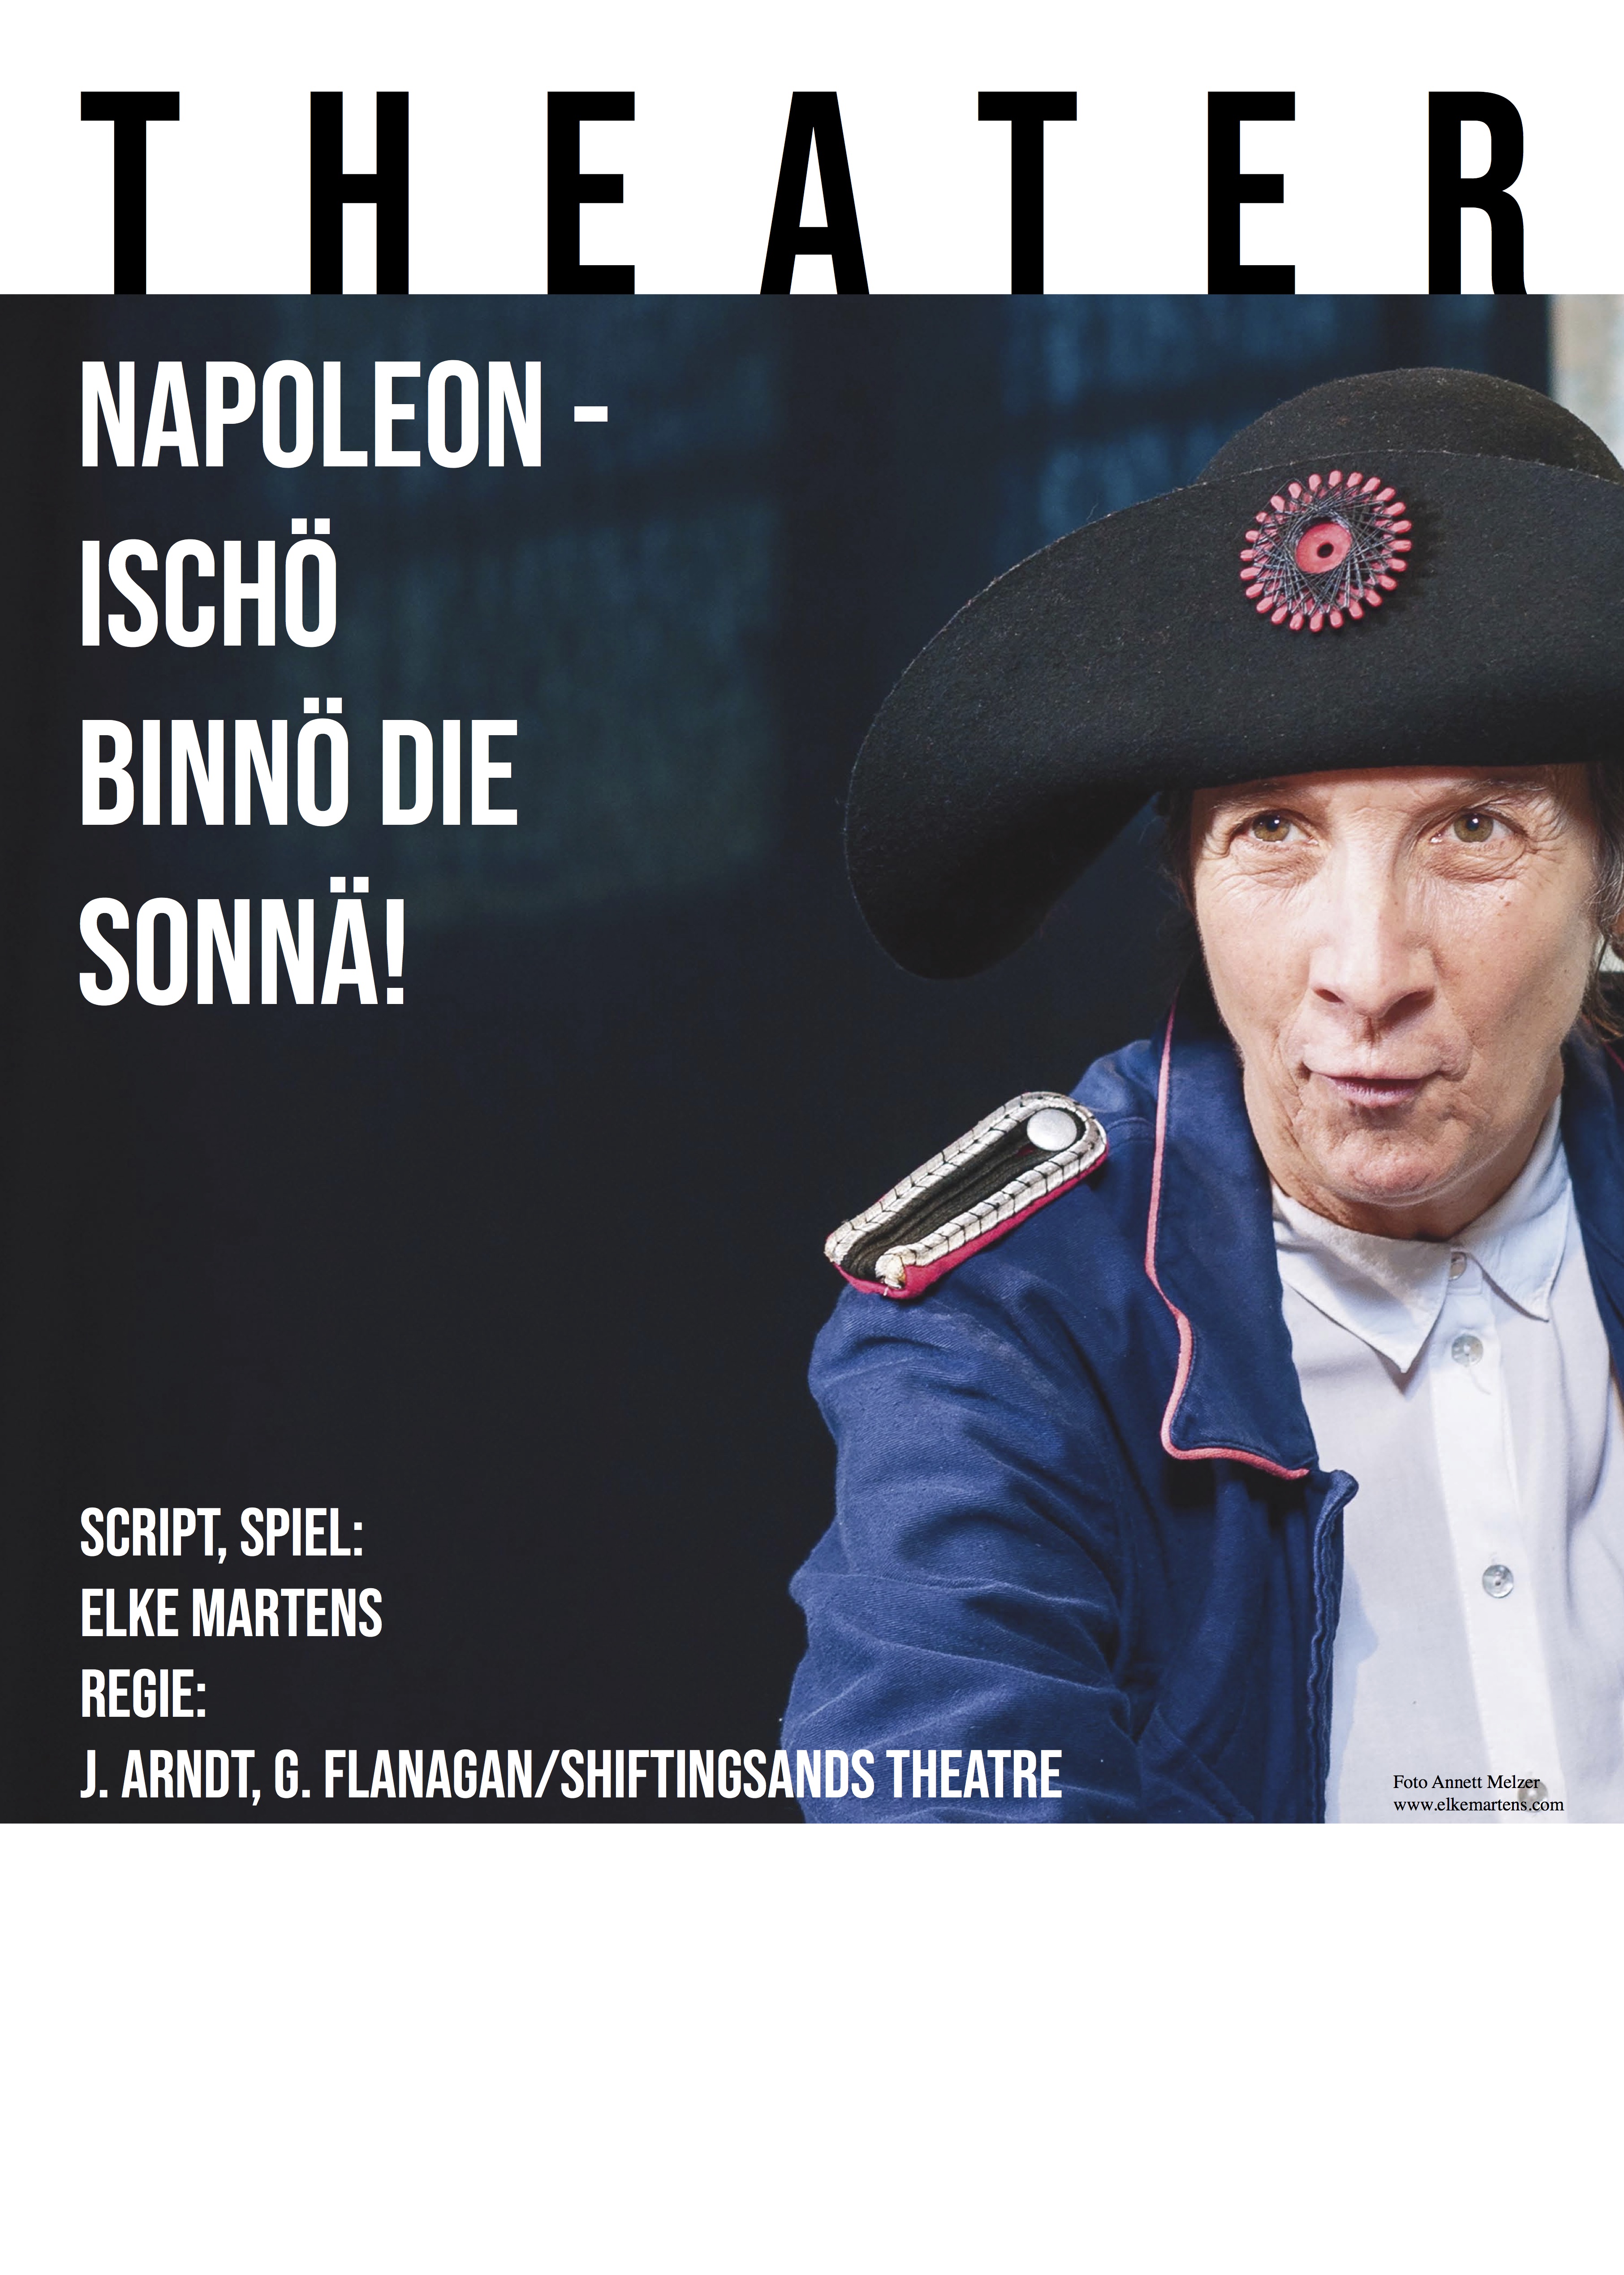 Napoleon Elke Martens Regie: J. Arndt, G. Flanagan ShiftingSands Theatre, England